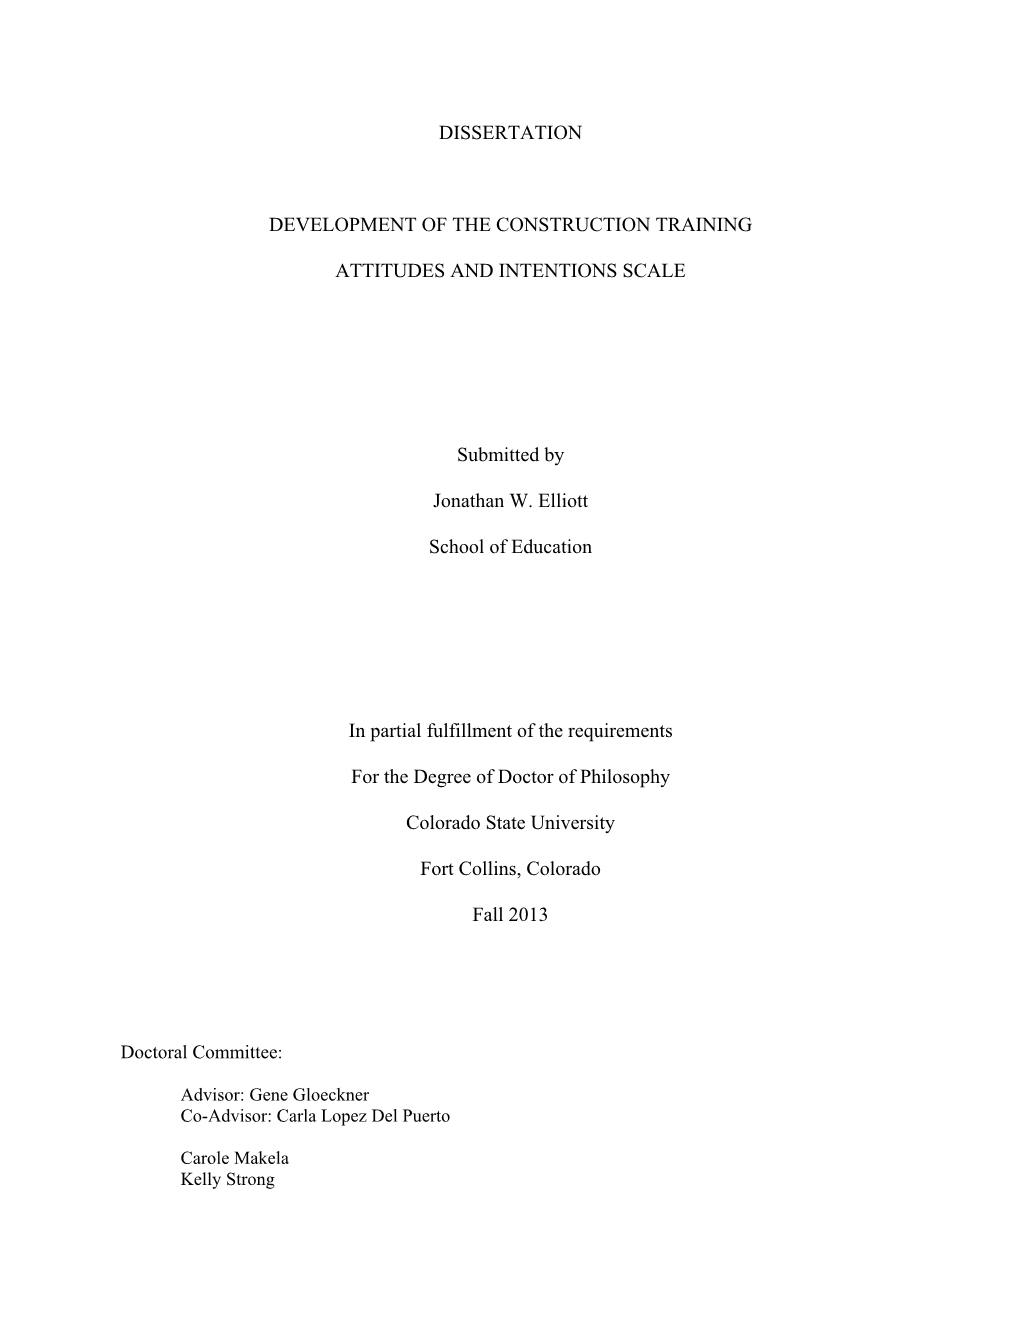 Dissertation Development of the Construction Training